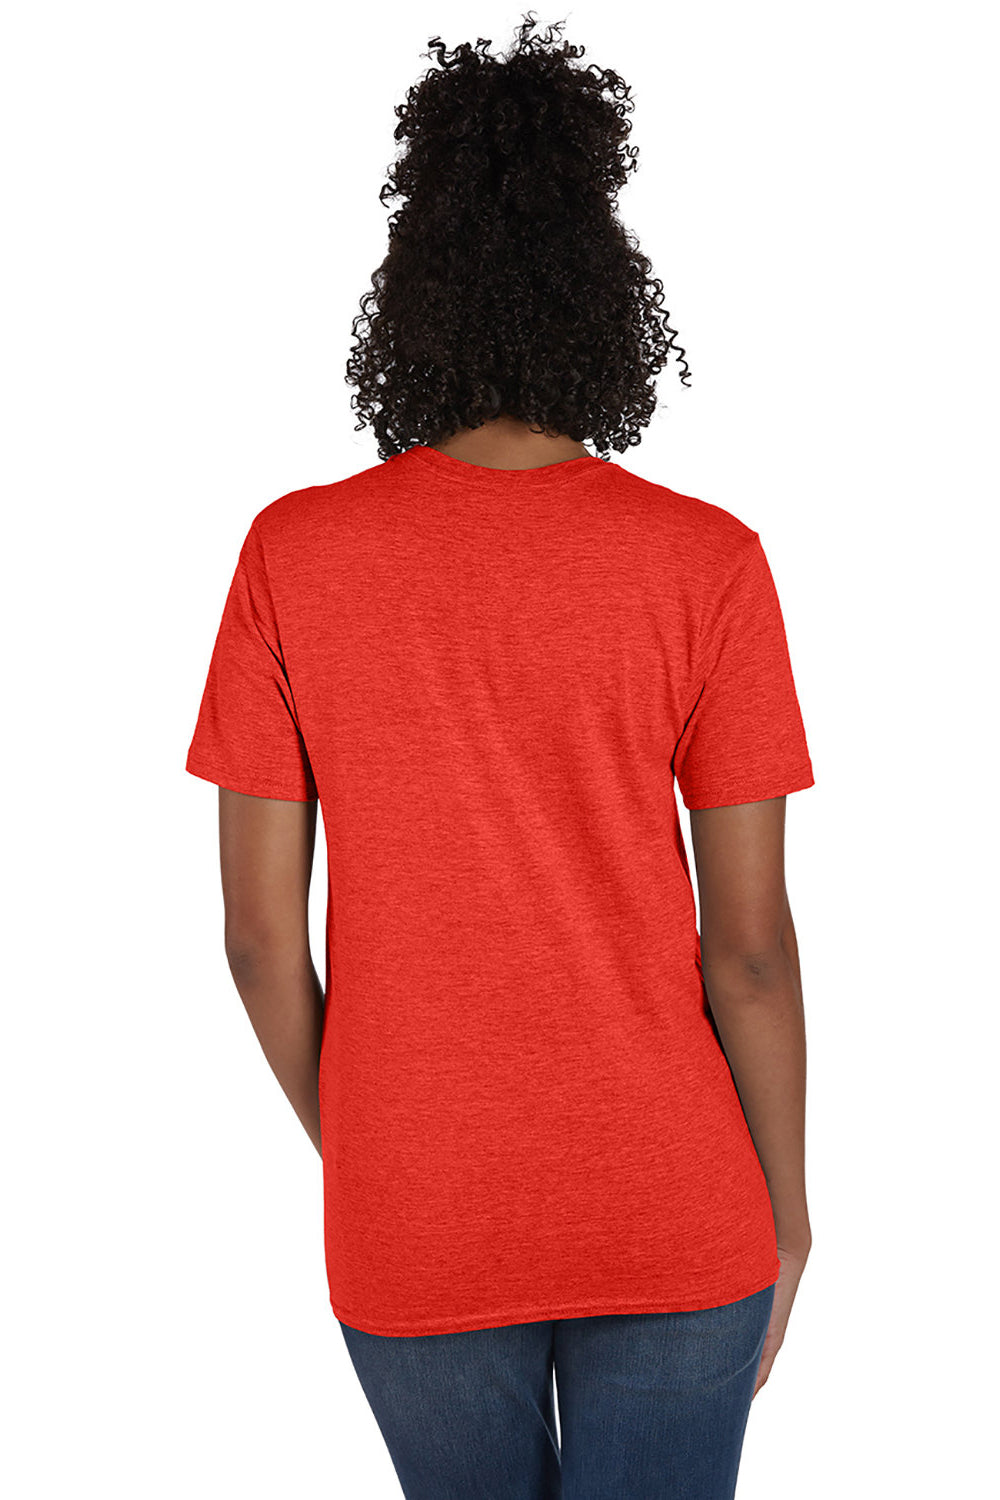 Hanes 4980 Mens Nano-T Short Sleeve Crewneck T-Shirt Heather Poppy Red Back